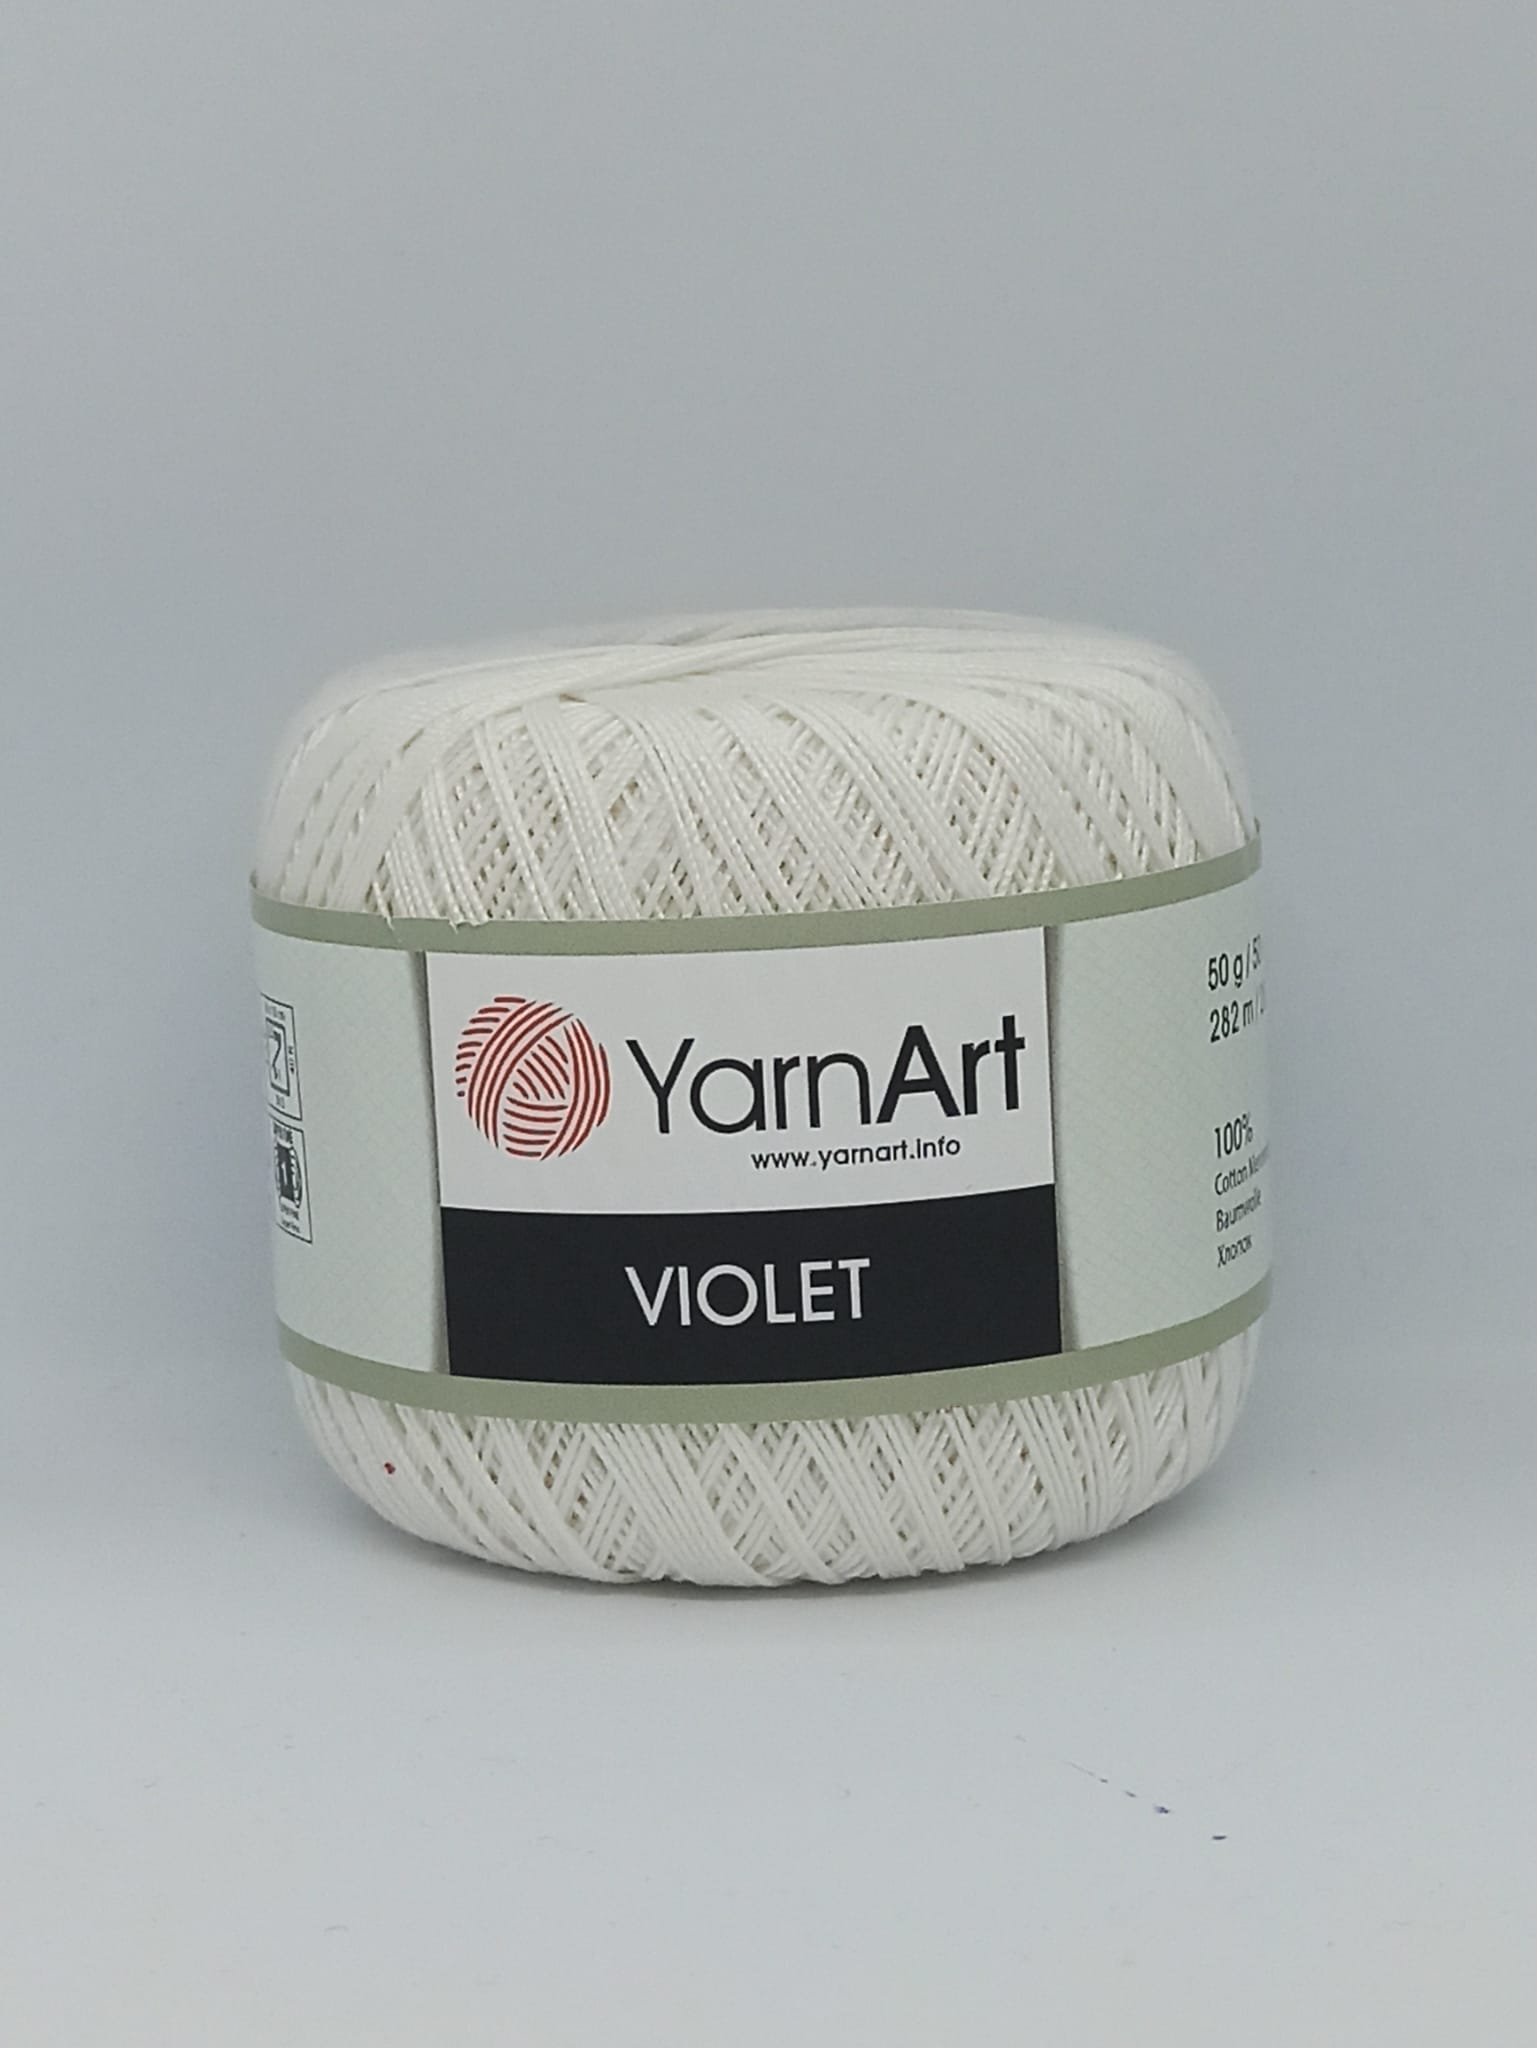 YarnArt Violet 003